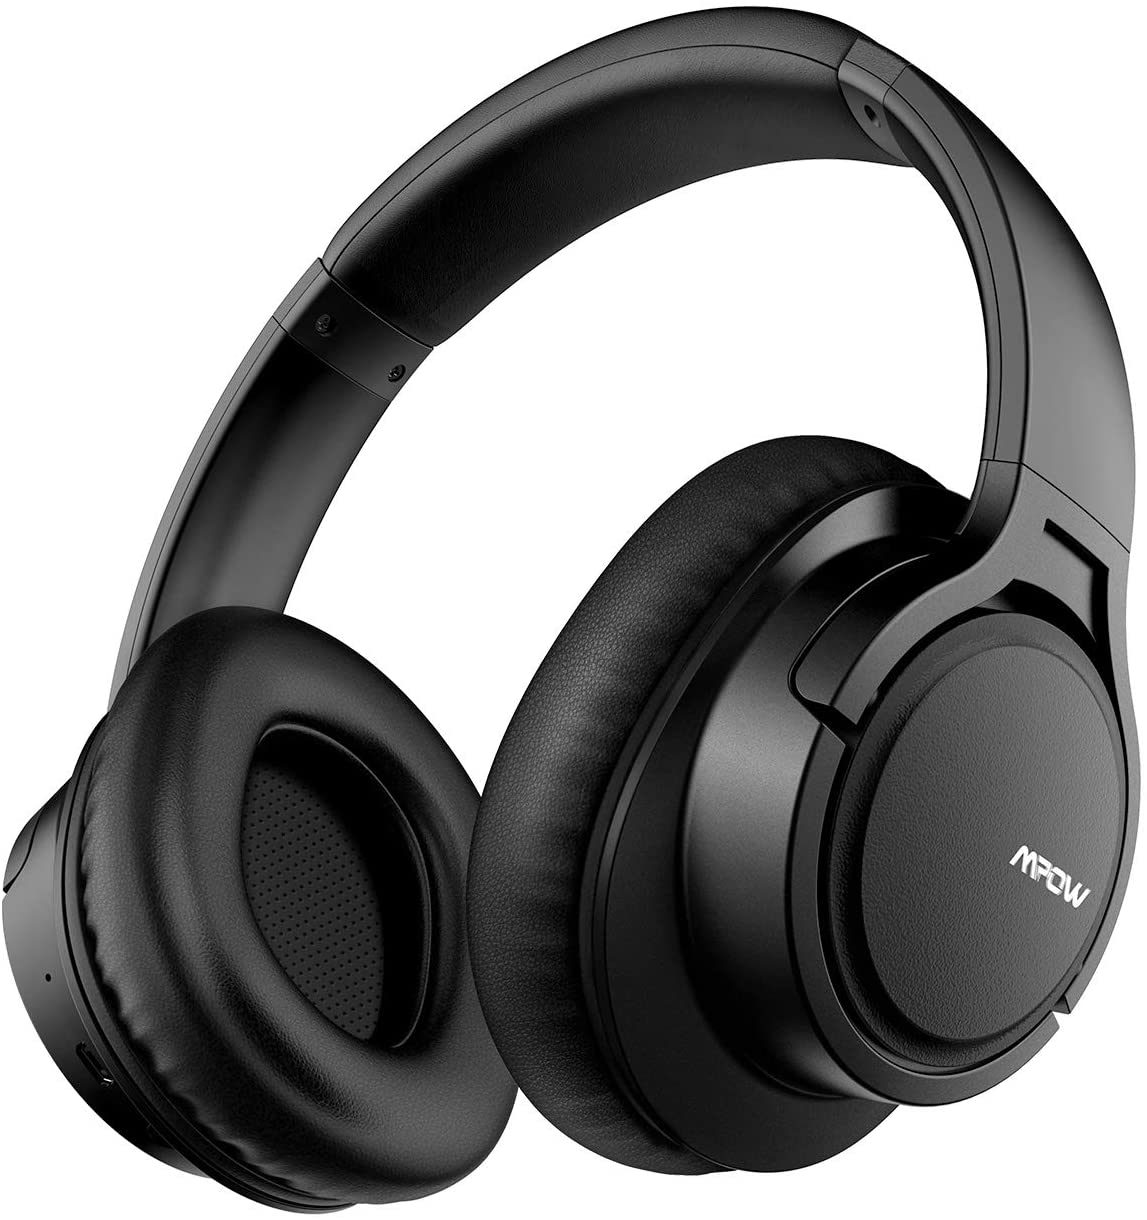 Sony ZX Series Stereo Over-Ear Headphones